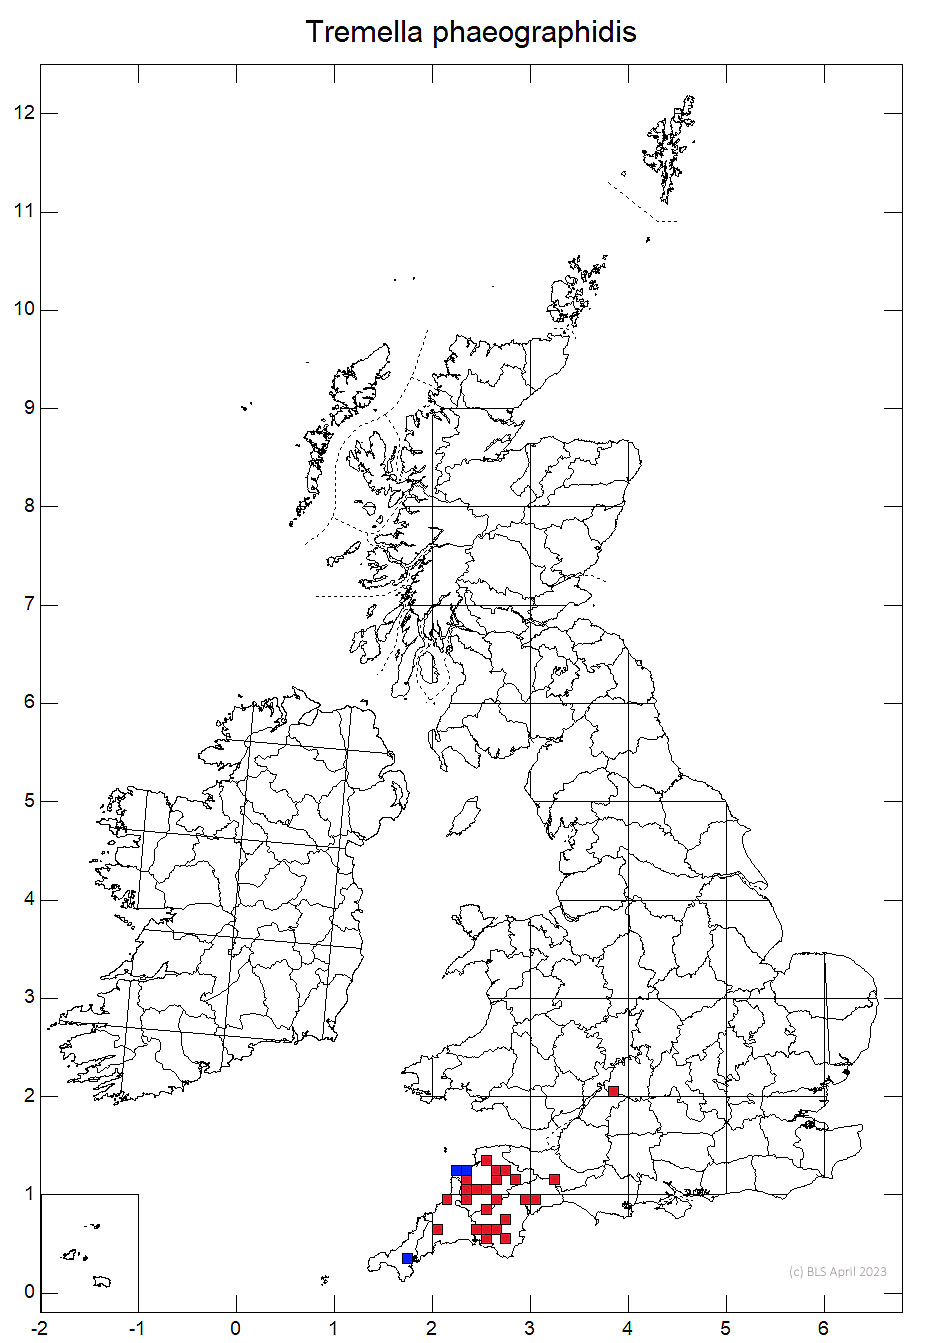 Tremella phaeographidis 10km sq distribution map